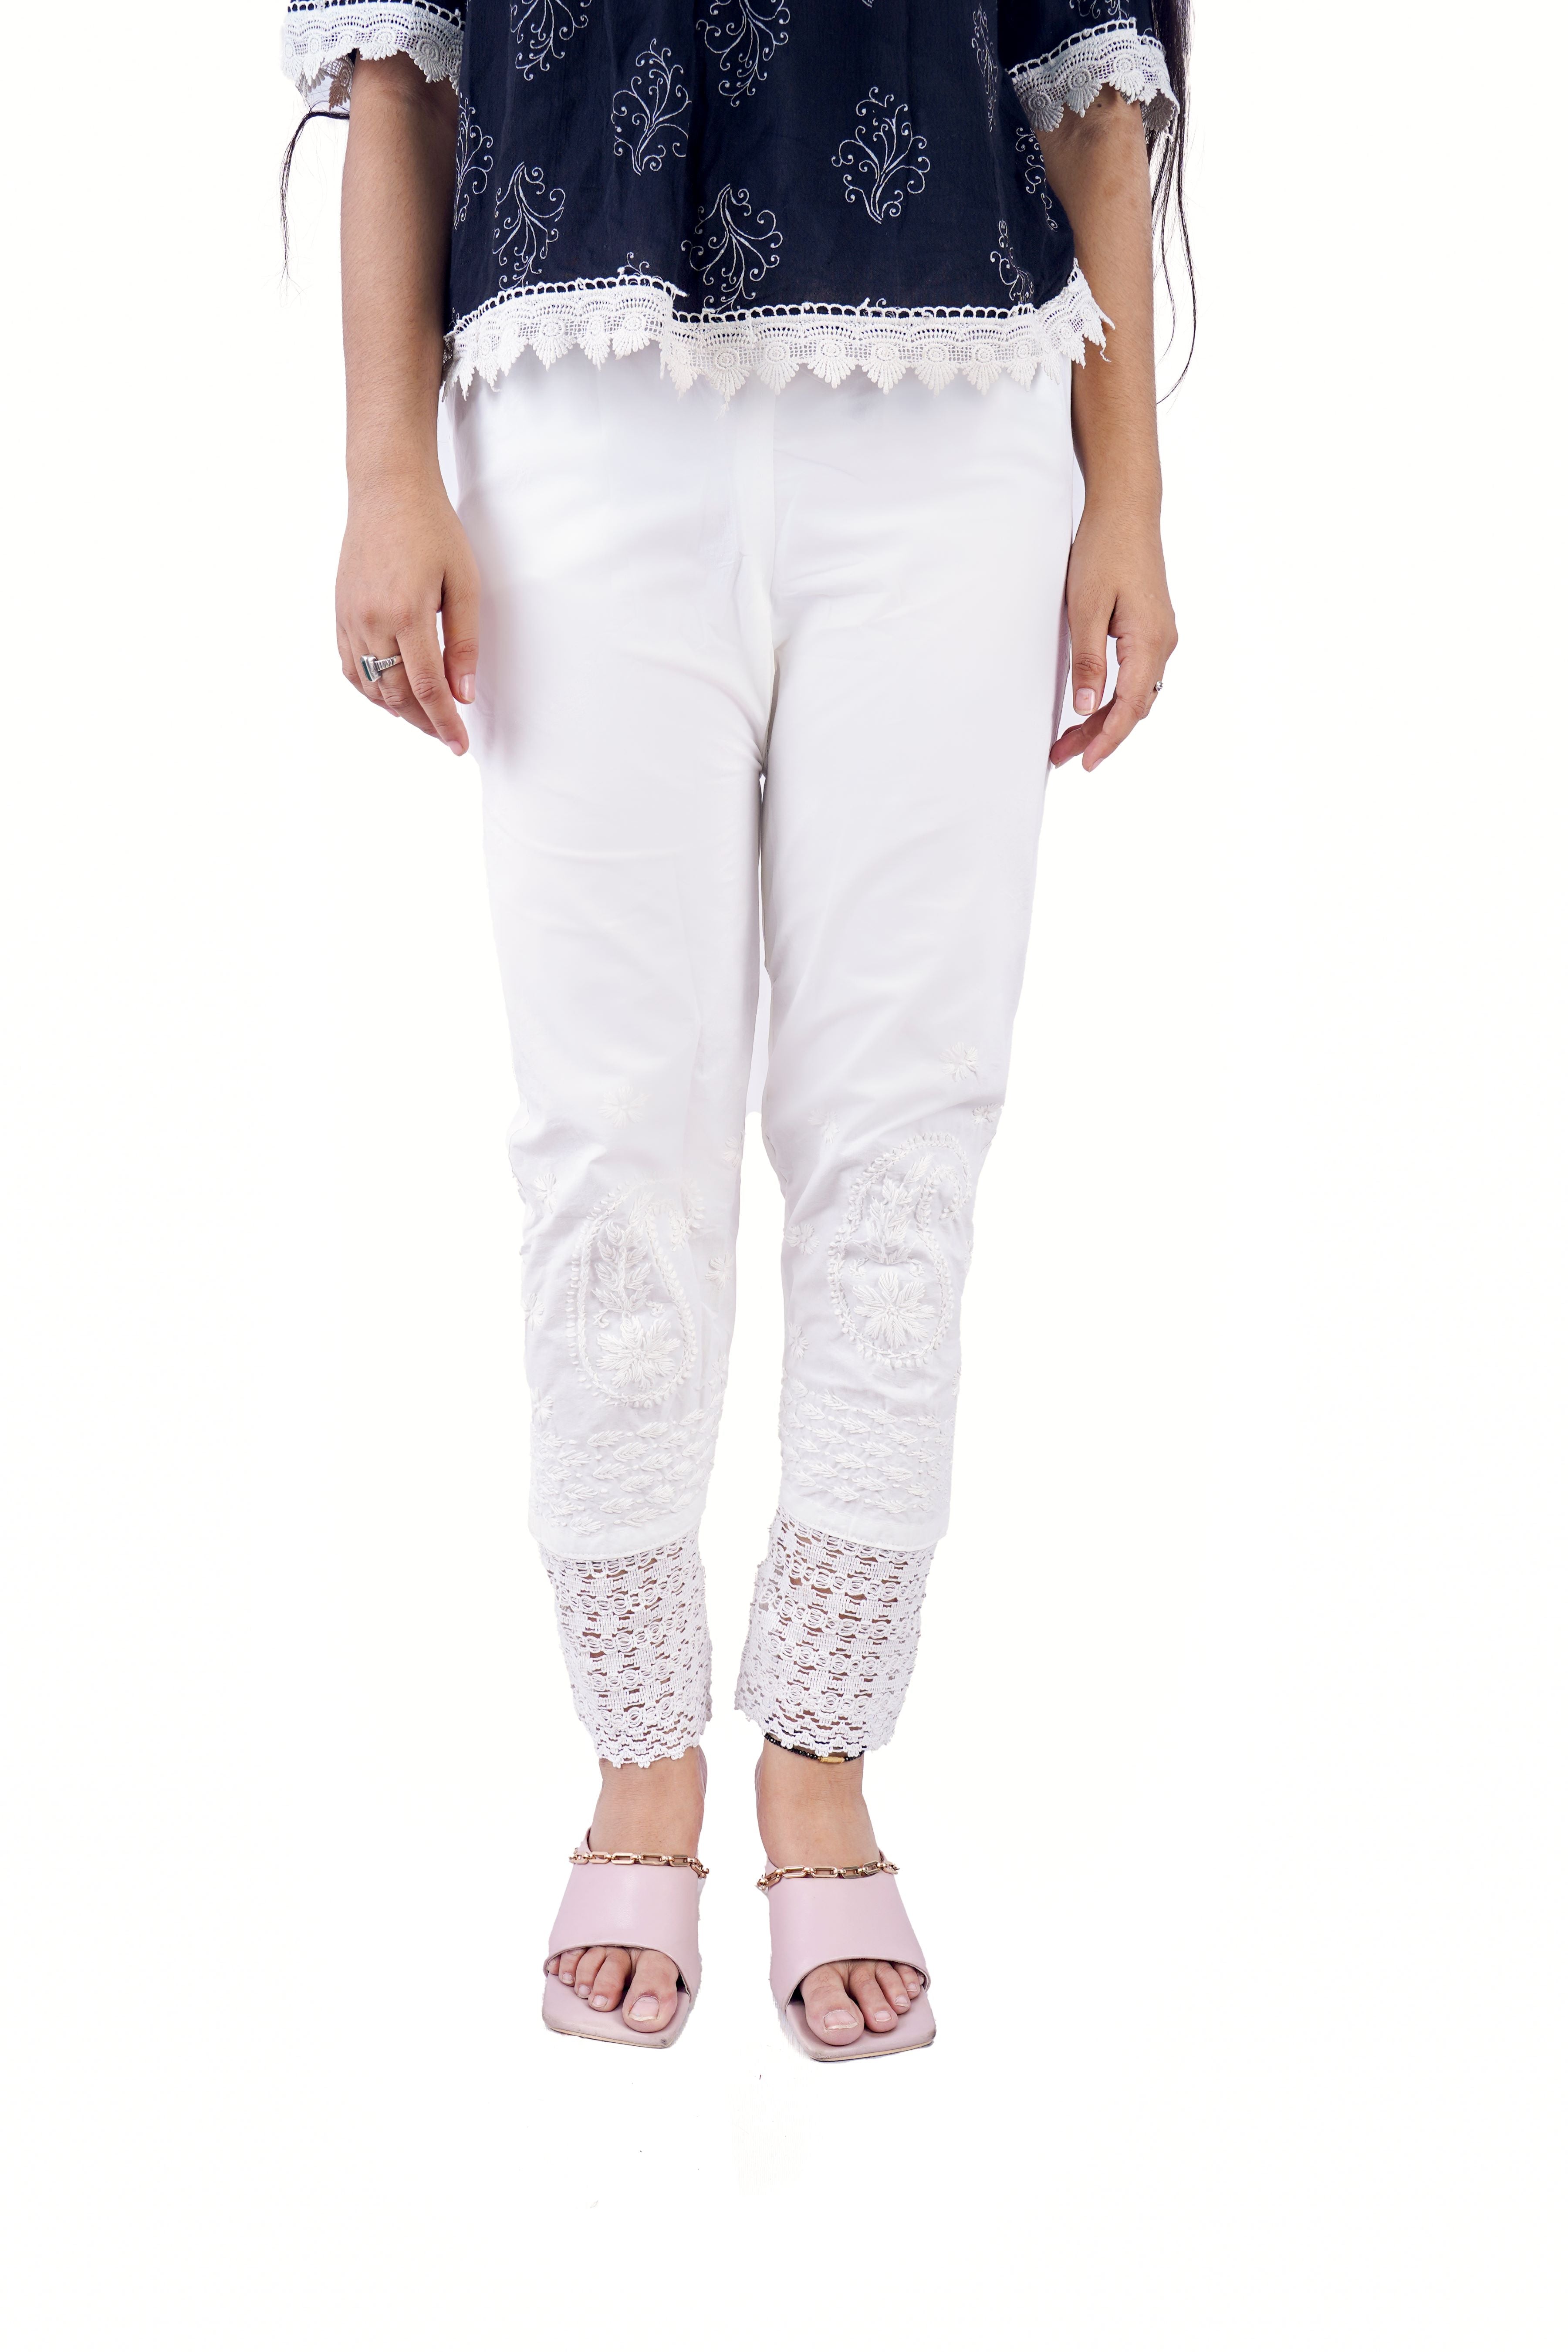 Lucknowi Chikankari Pants, Stretchable White Cotton Pants, Ankle Length  Pants, Chikankari for Indian Kurta, Straight Pants, Indian Clothes - Etsy |  Cotton lycra fabric, Pants, Stylish pants